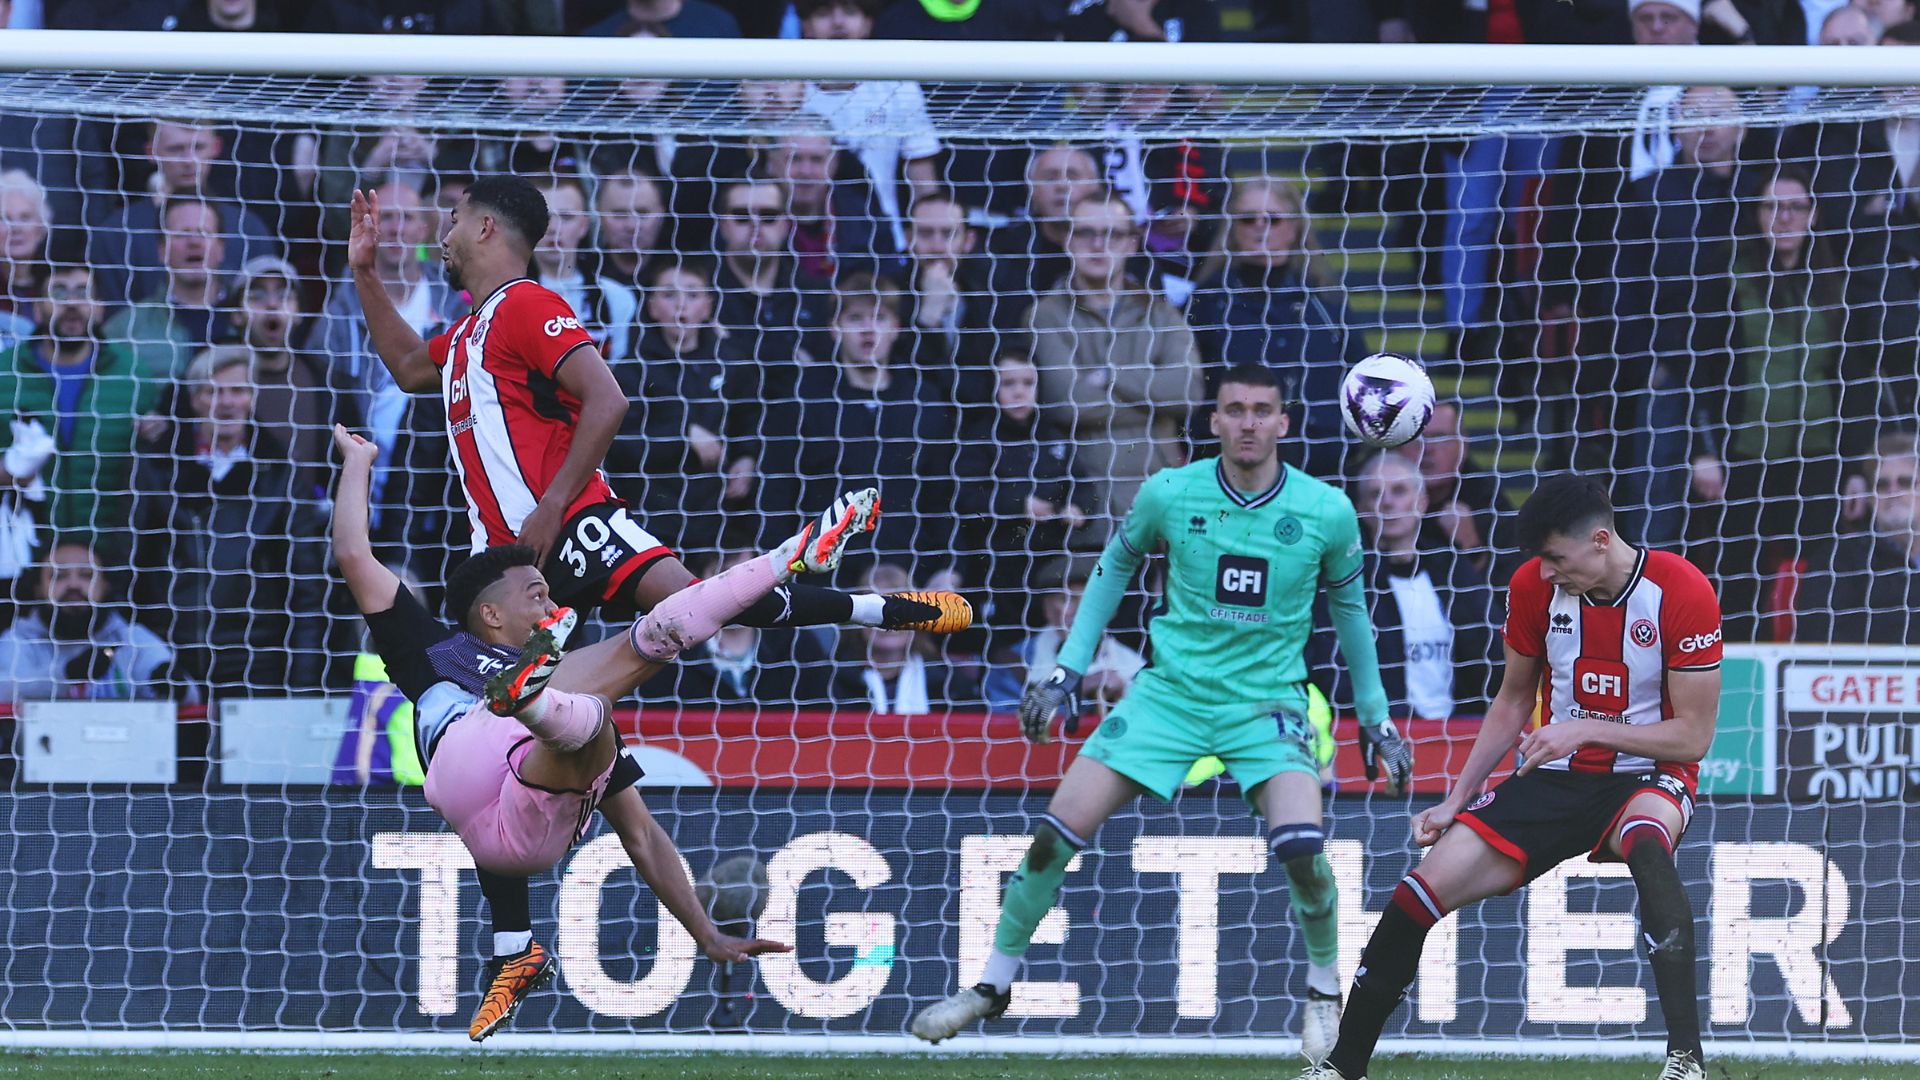 Rodrigo Muniz scored a great volley against Sheffield United (Credit: Getty Images)